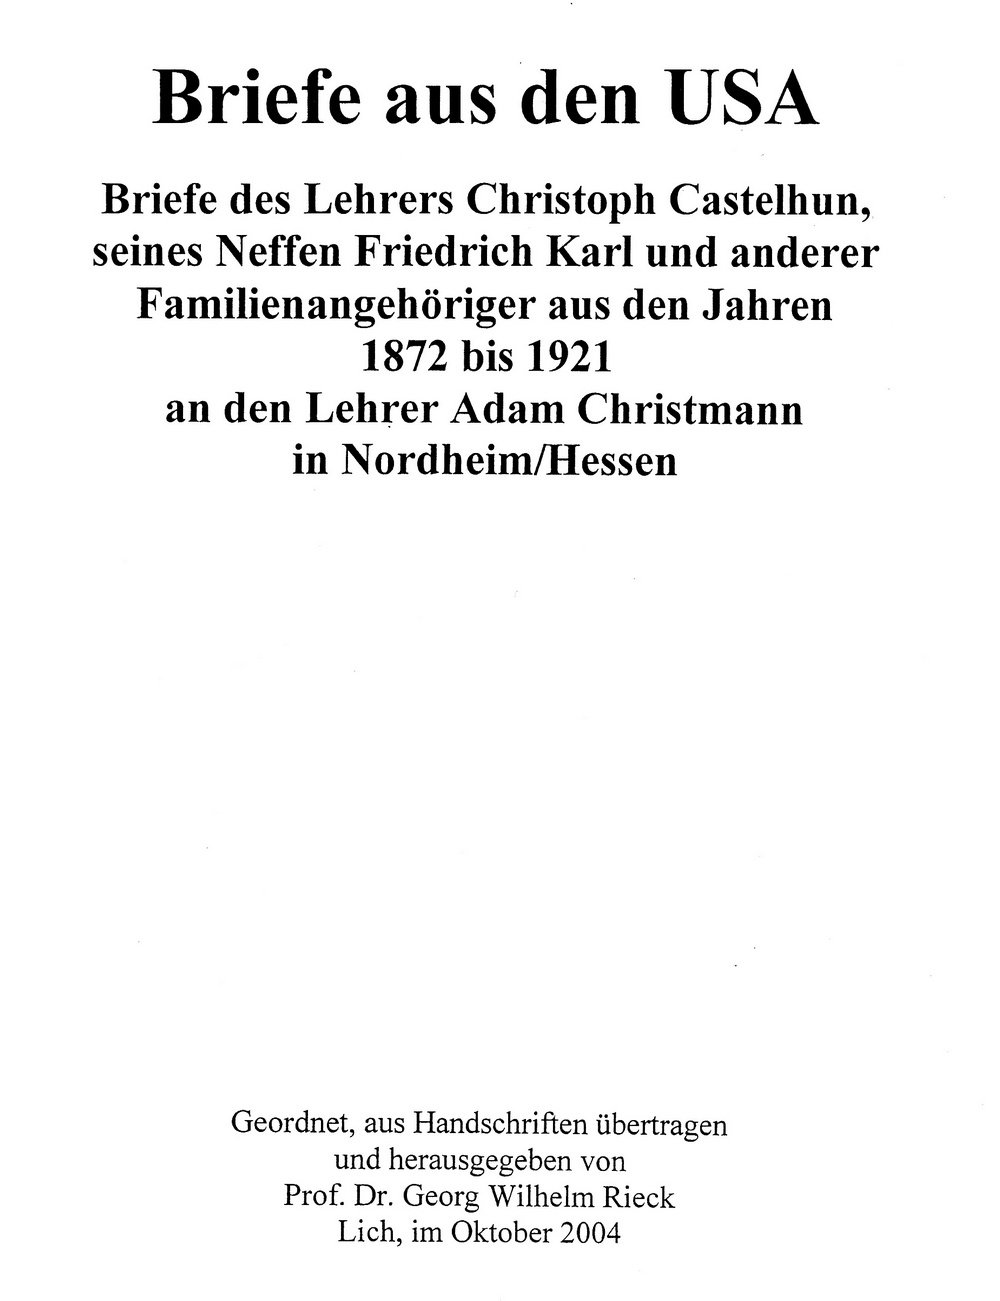 422561 Castelhun Briefe (Kulturverein Guntersblum CC BY-NC-SA)